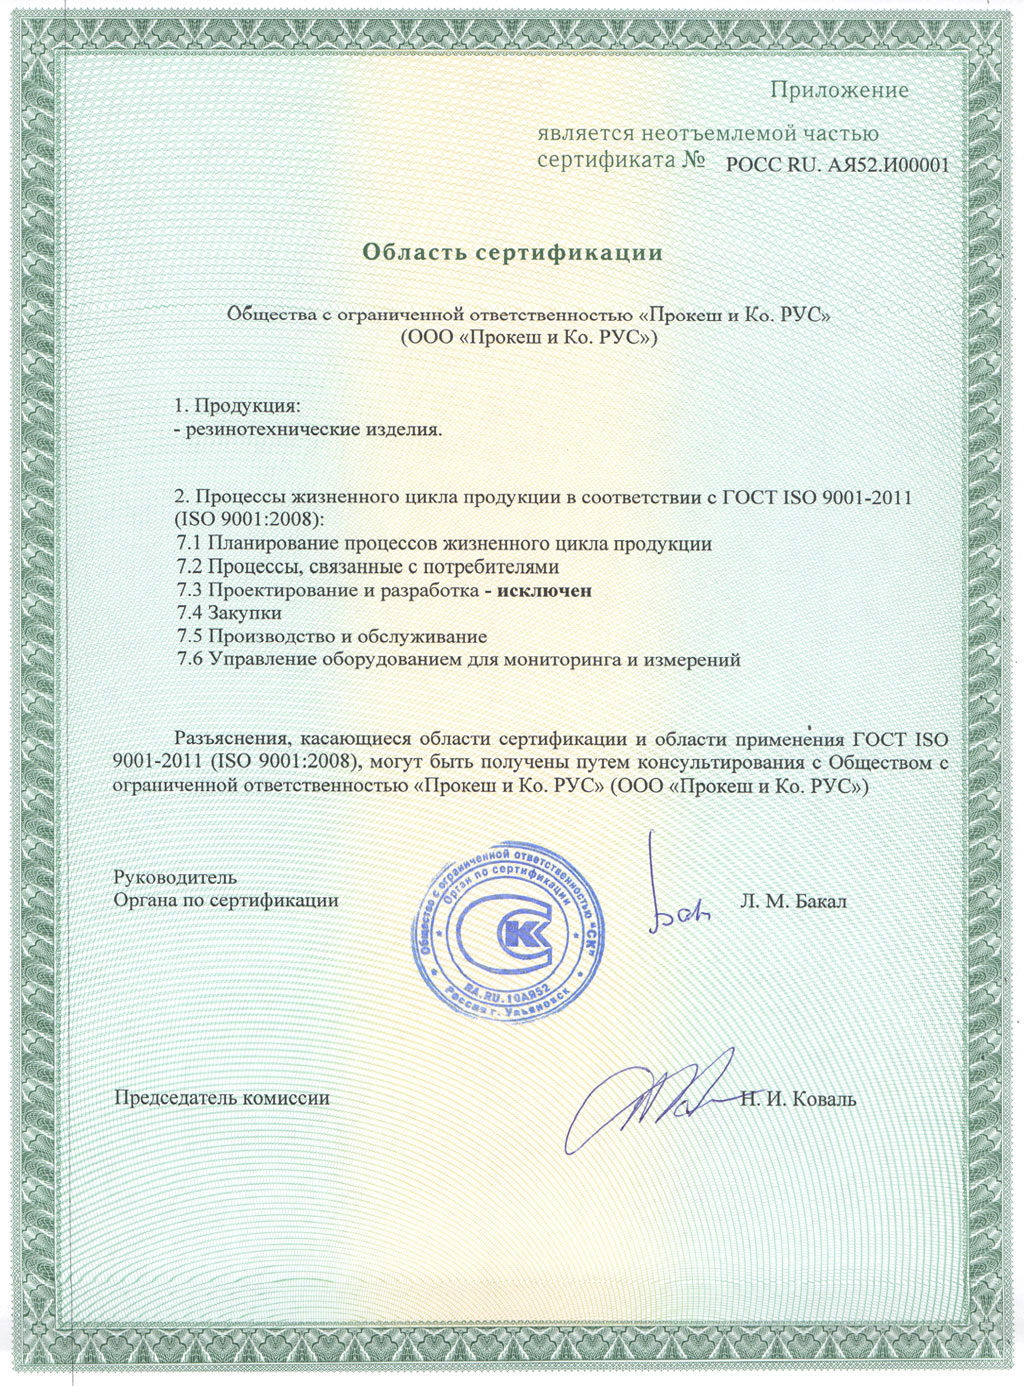 Приложение к сертификату ISO